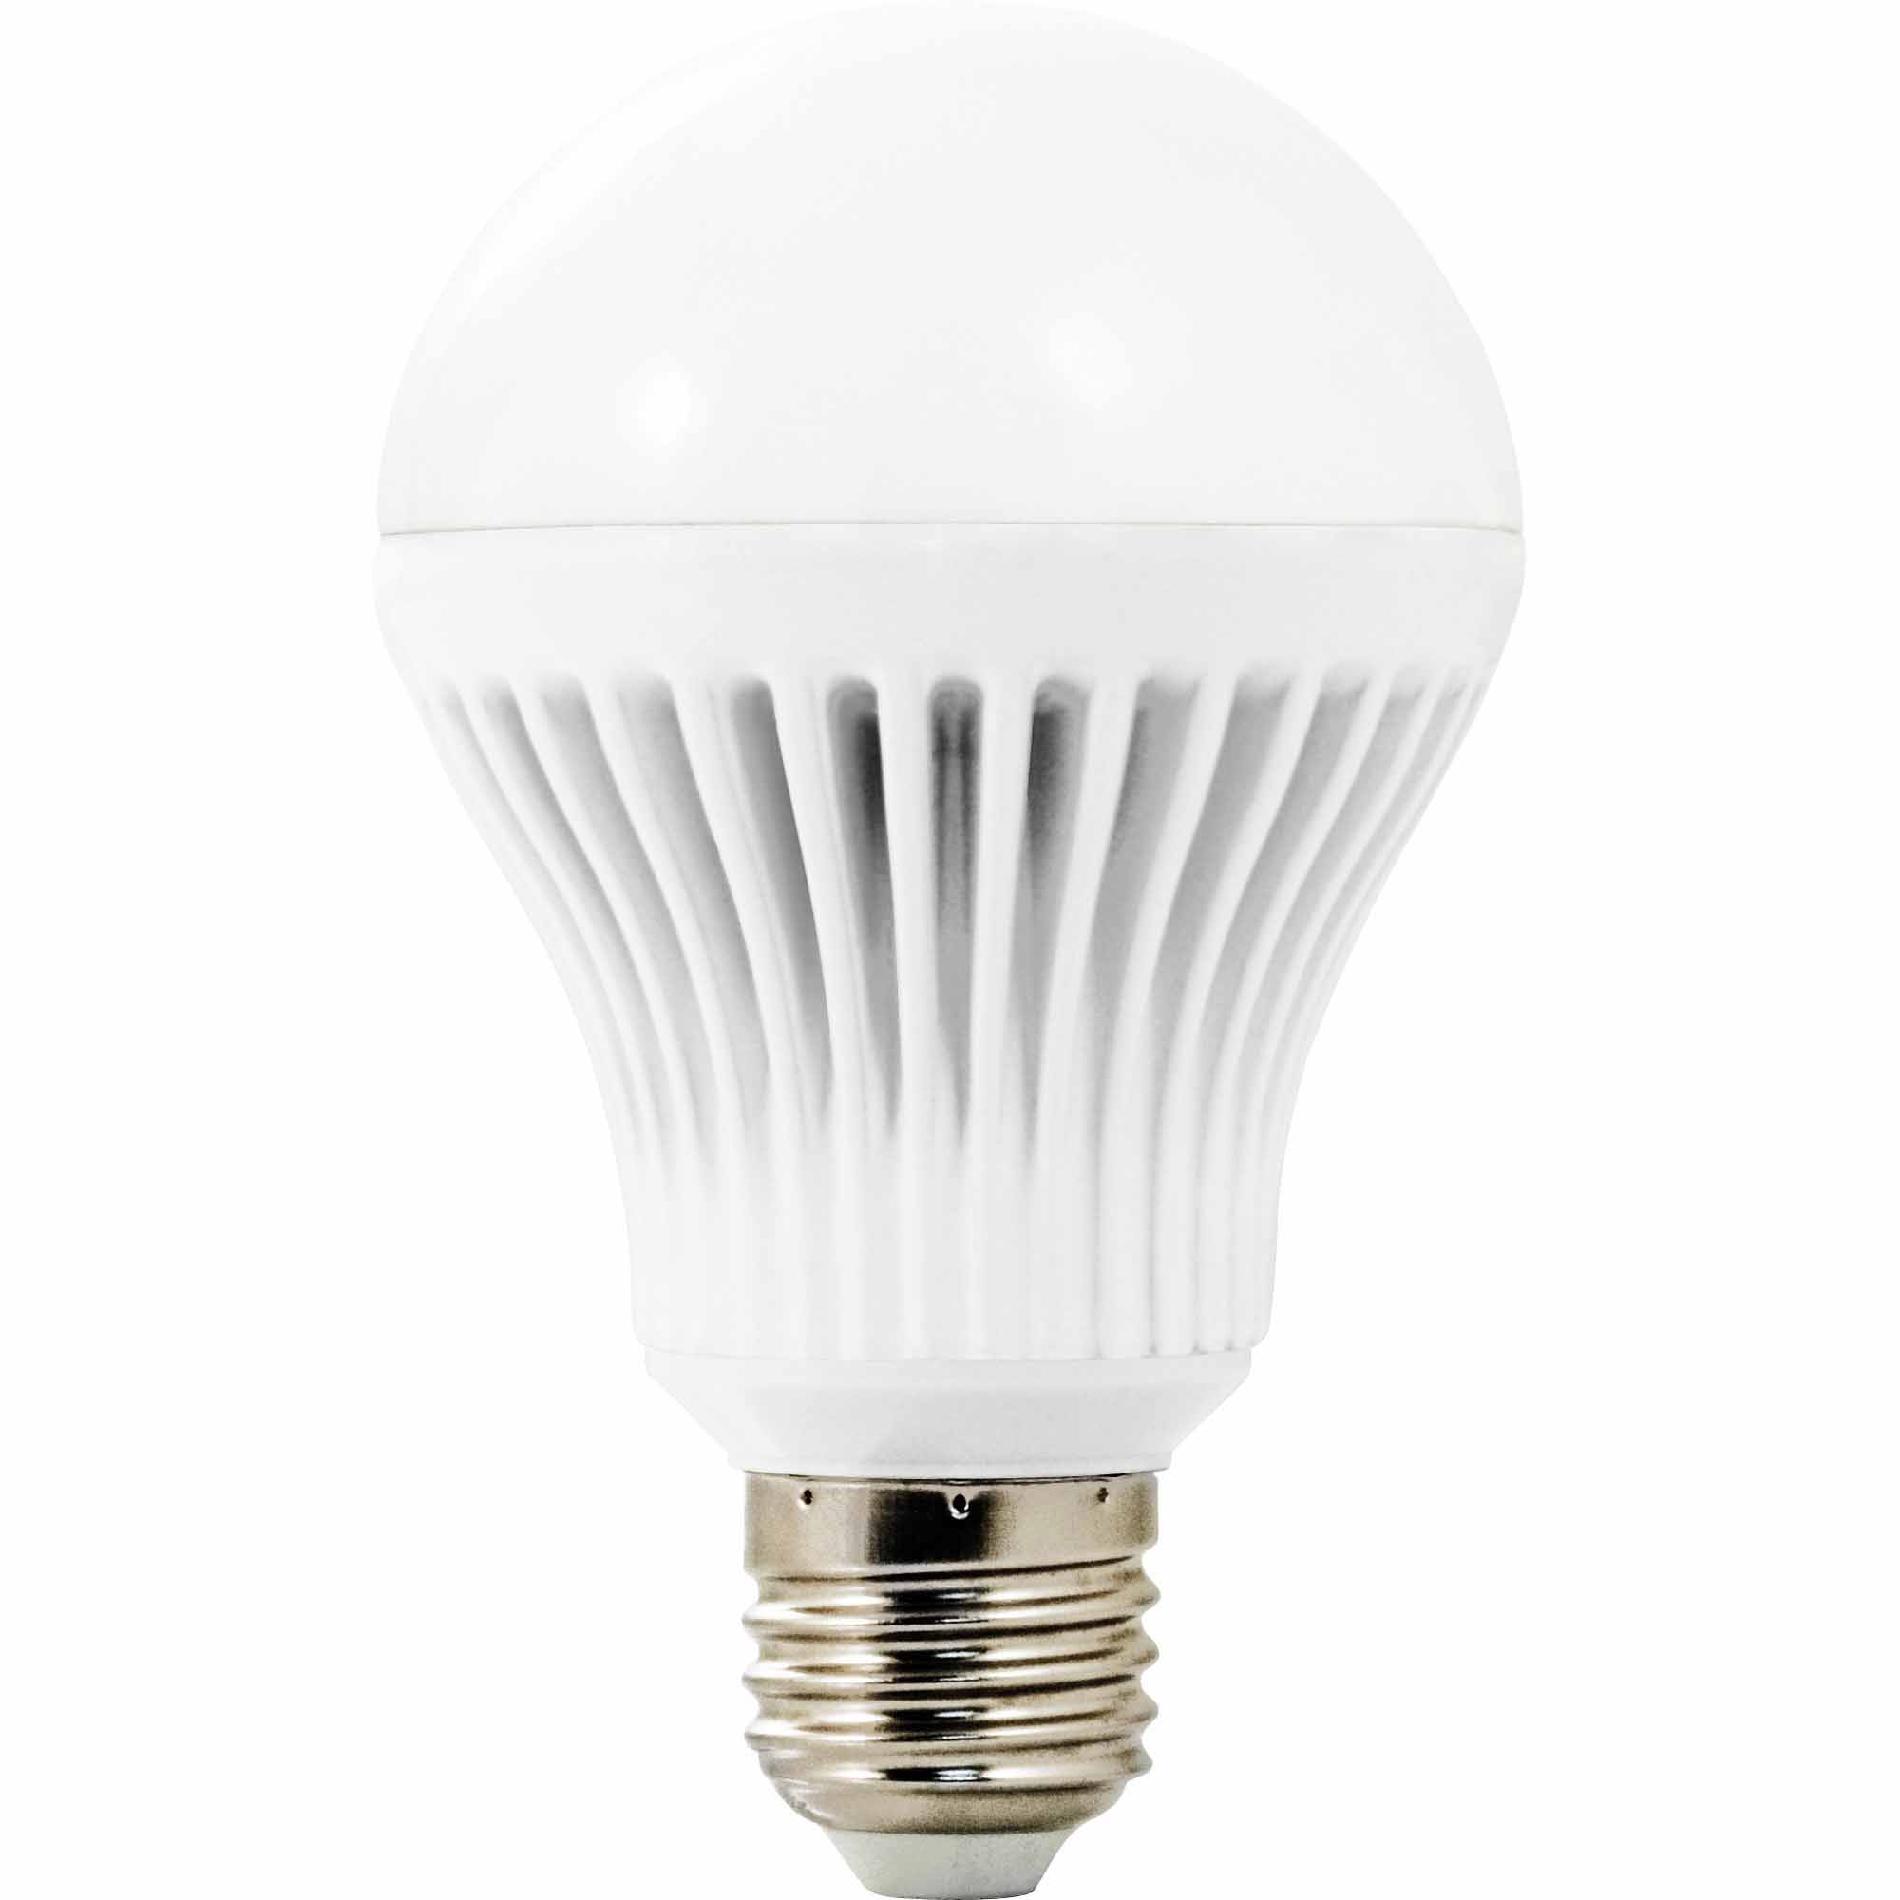 Светодиодные лампы e27 6400k. Лампы светодиодные с аккумулятором и цоколем е27. Лампа SAFFIT led-a60 35w е27 6400k. Лампочка Vitoone 5w. E27 цоколь светодиодная лампа.